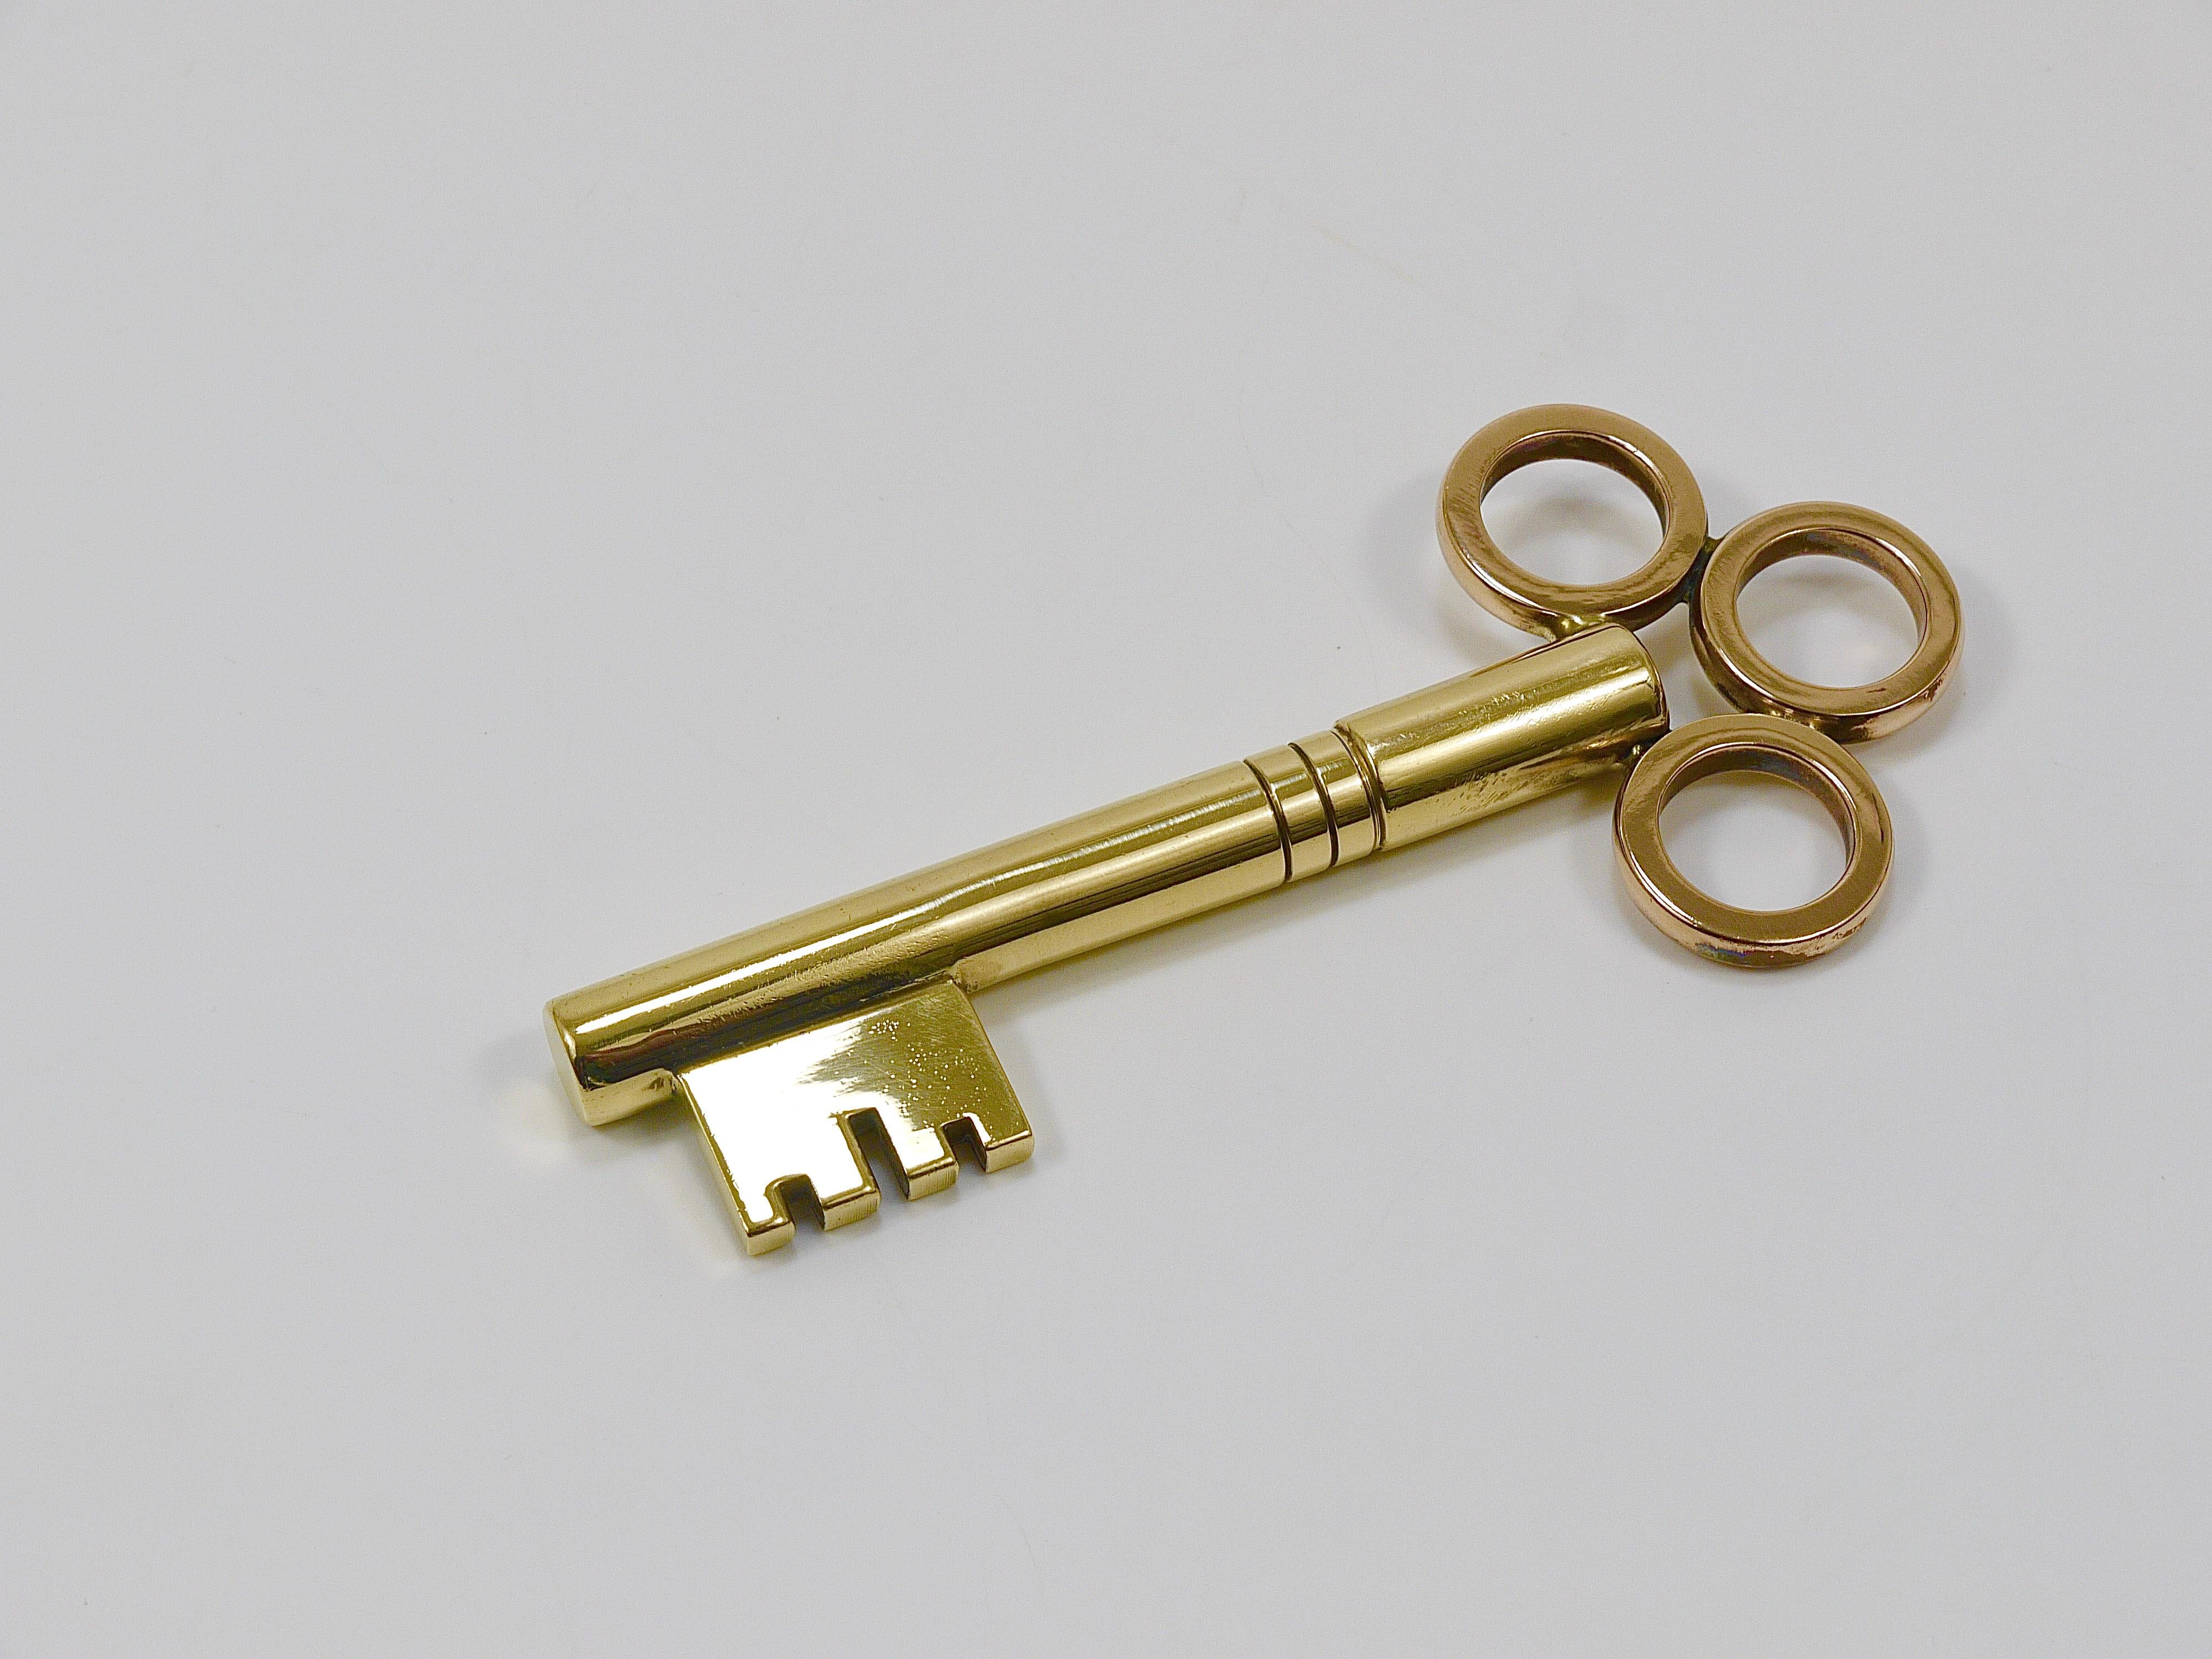 Large Carl Aubock Brass Key Corkscrew Bottle Opener Paperweight, Austria, 1950s For Sale 6